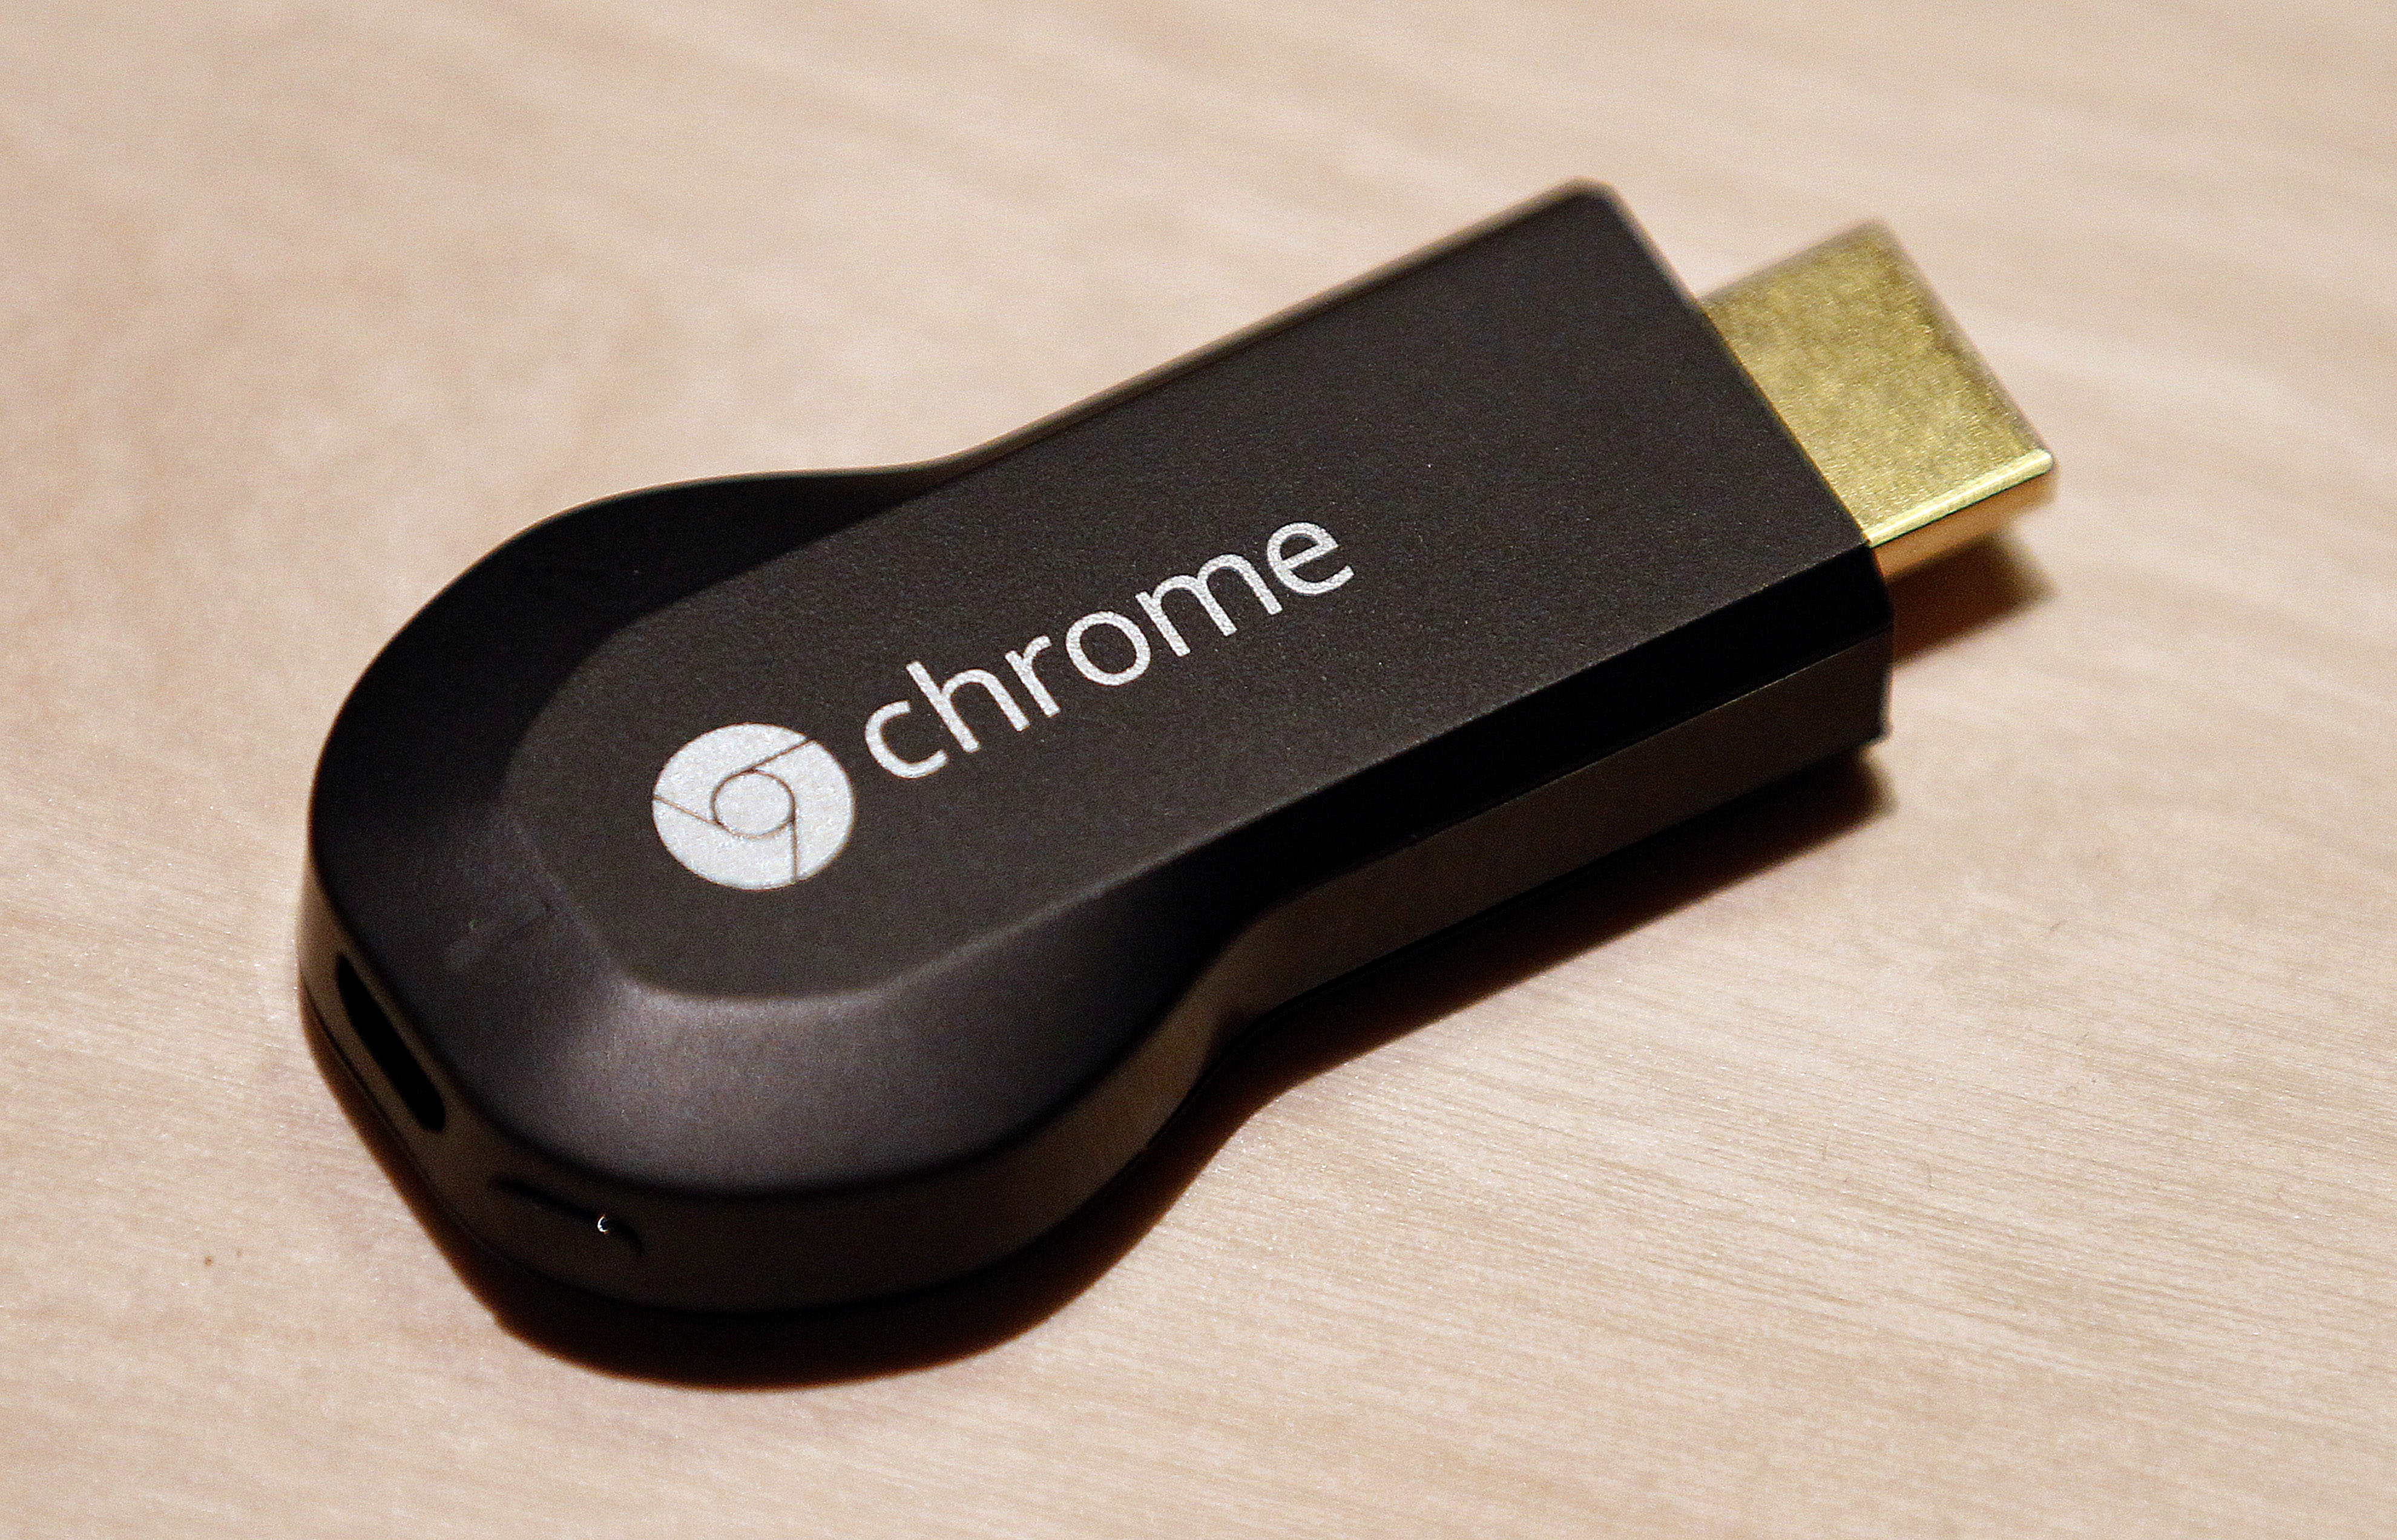 Google's Chromecast (Bloomberg via Getty Images)